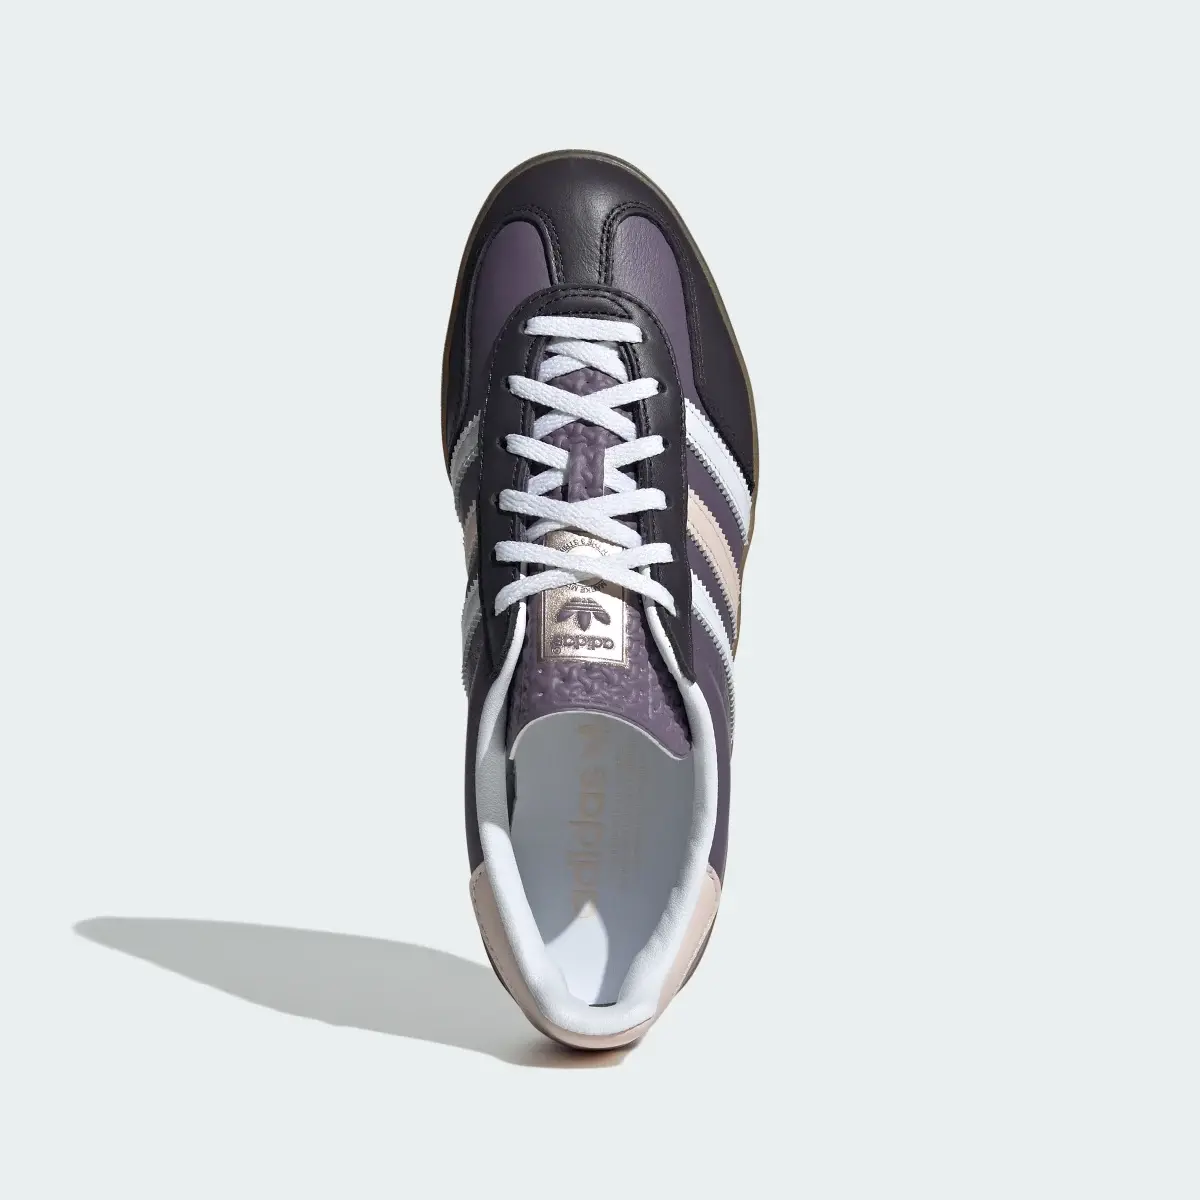 Adidas Gazelle Indoor Shoes. 3